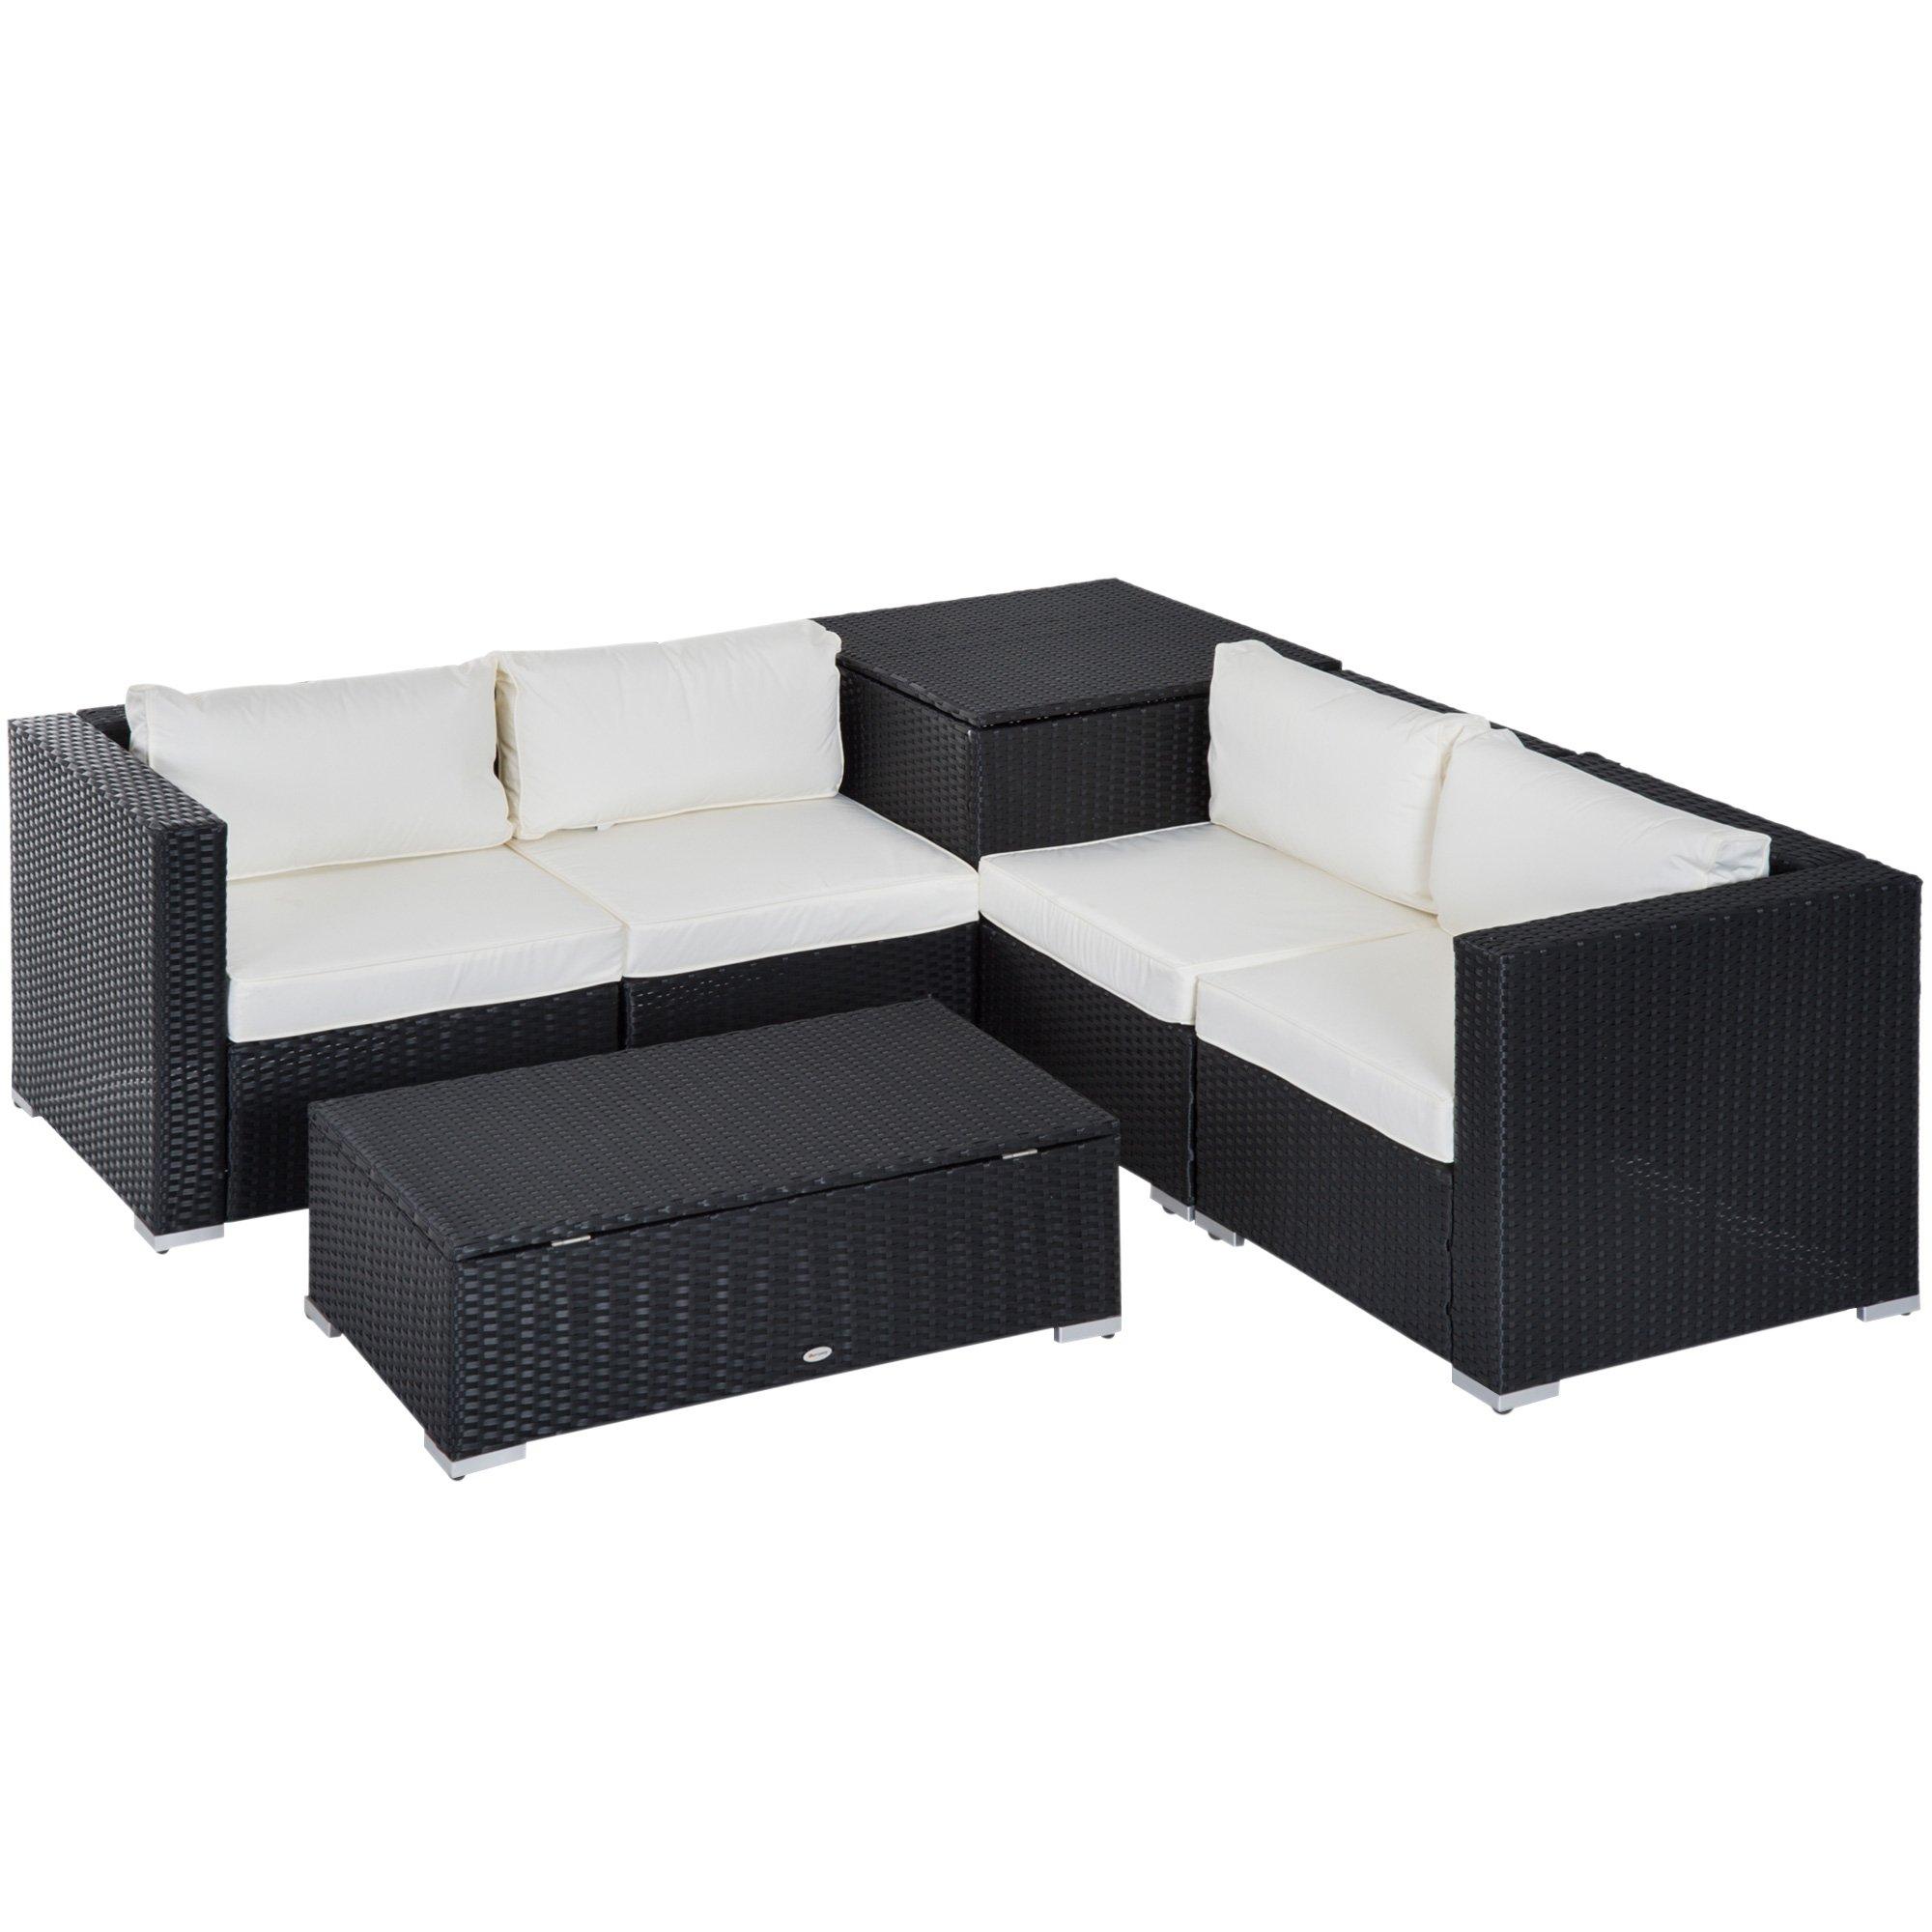 6 PCs Rattan Furniture Sofa Set Side Table Garden Patio Conversation with Cushion